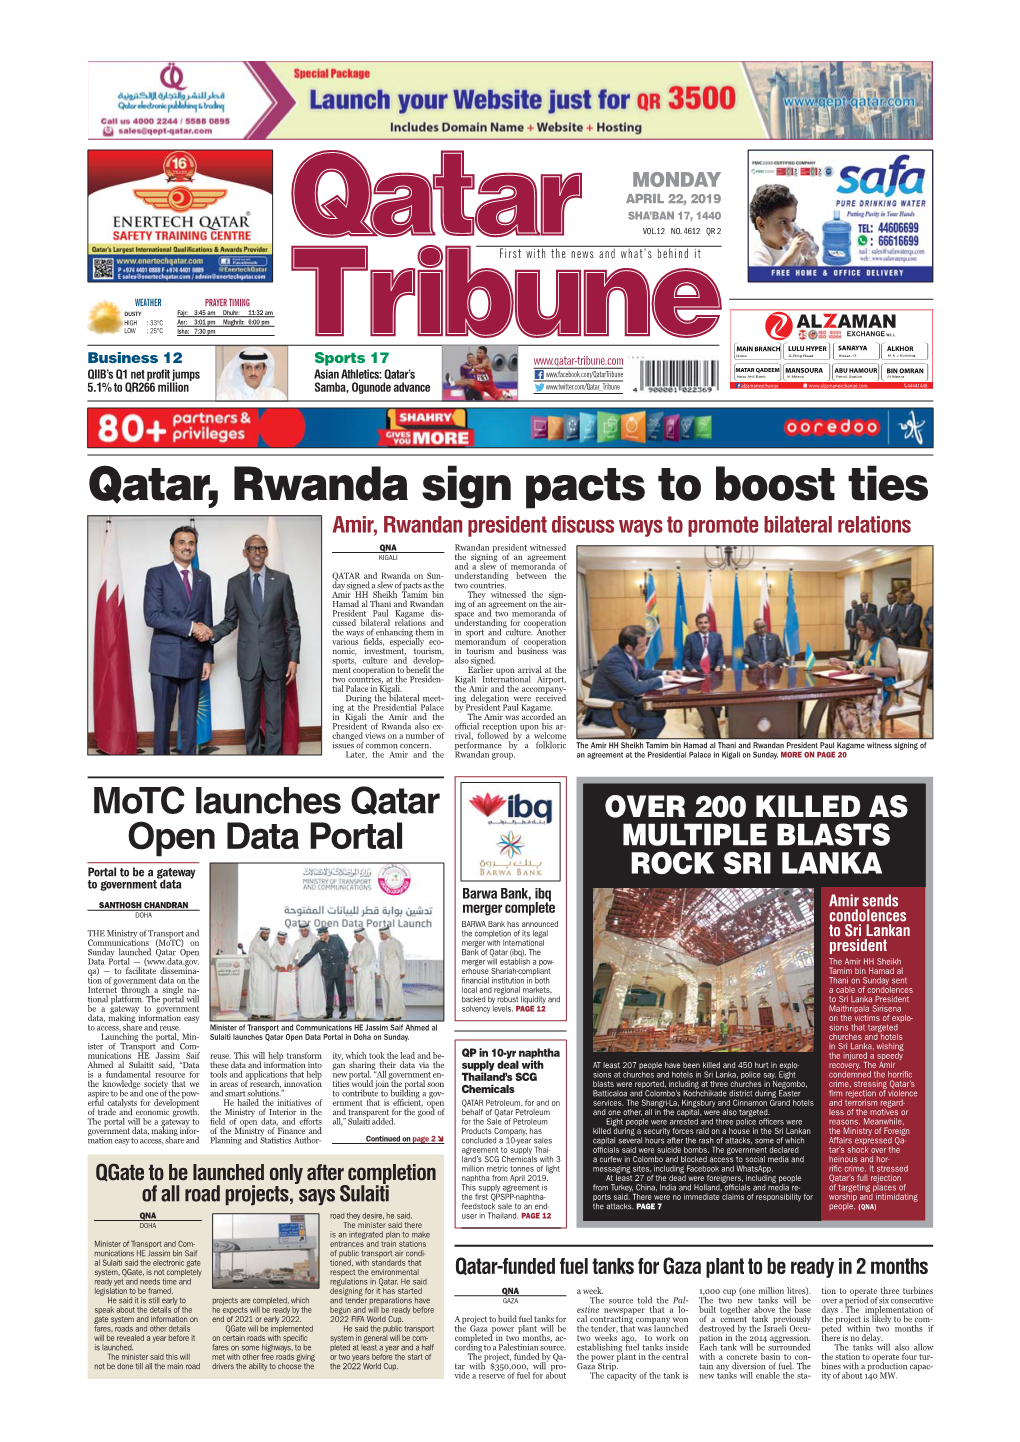 Qatar, Rwanda Sign Pacts to Boost Ties